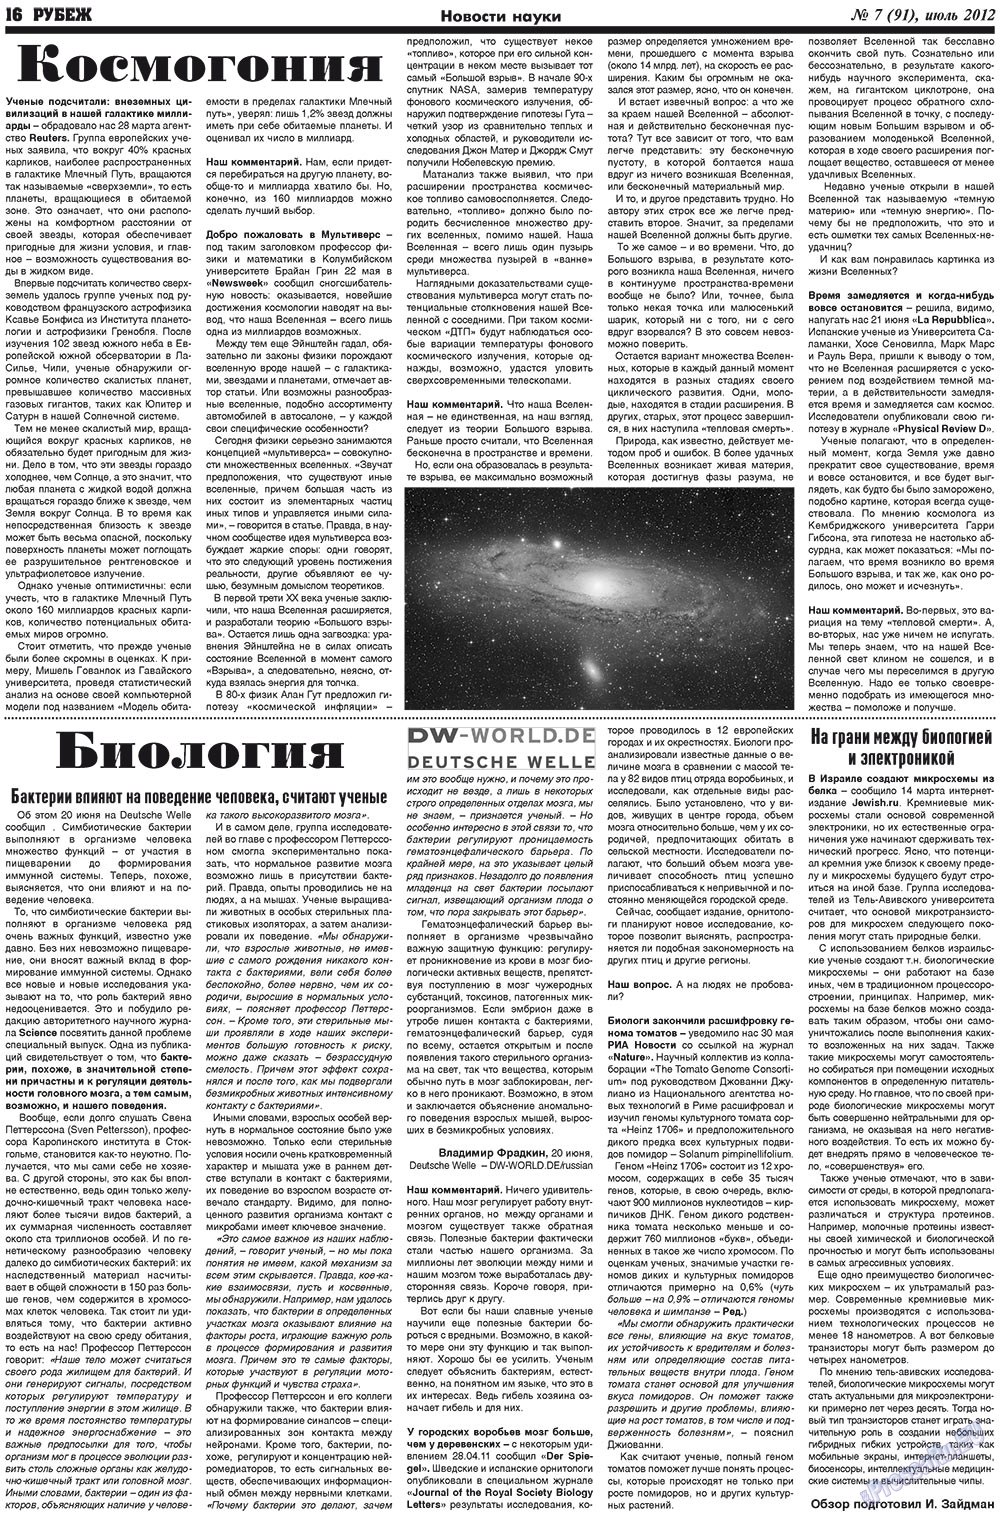 Рубеж, газета. 2012 №7 стр.16